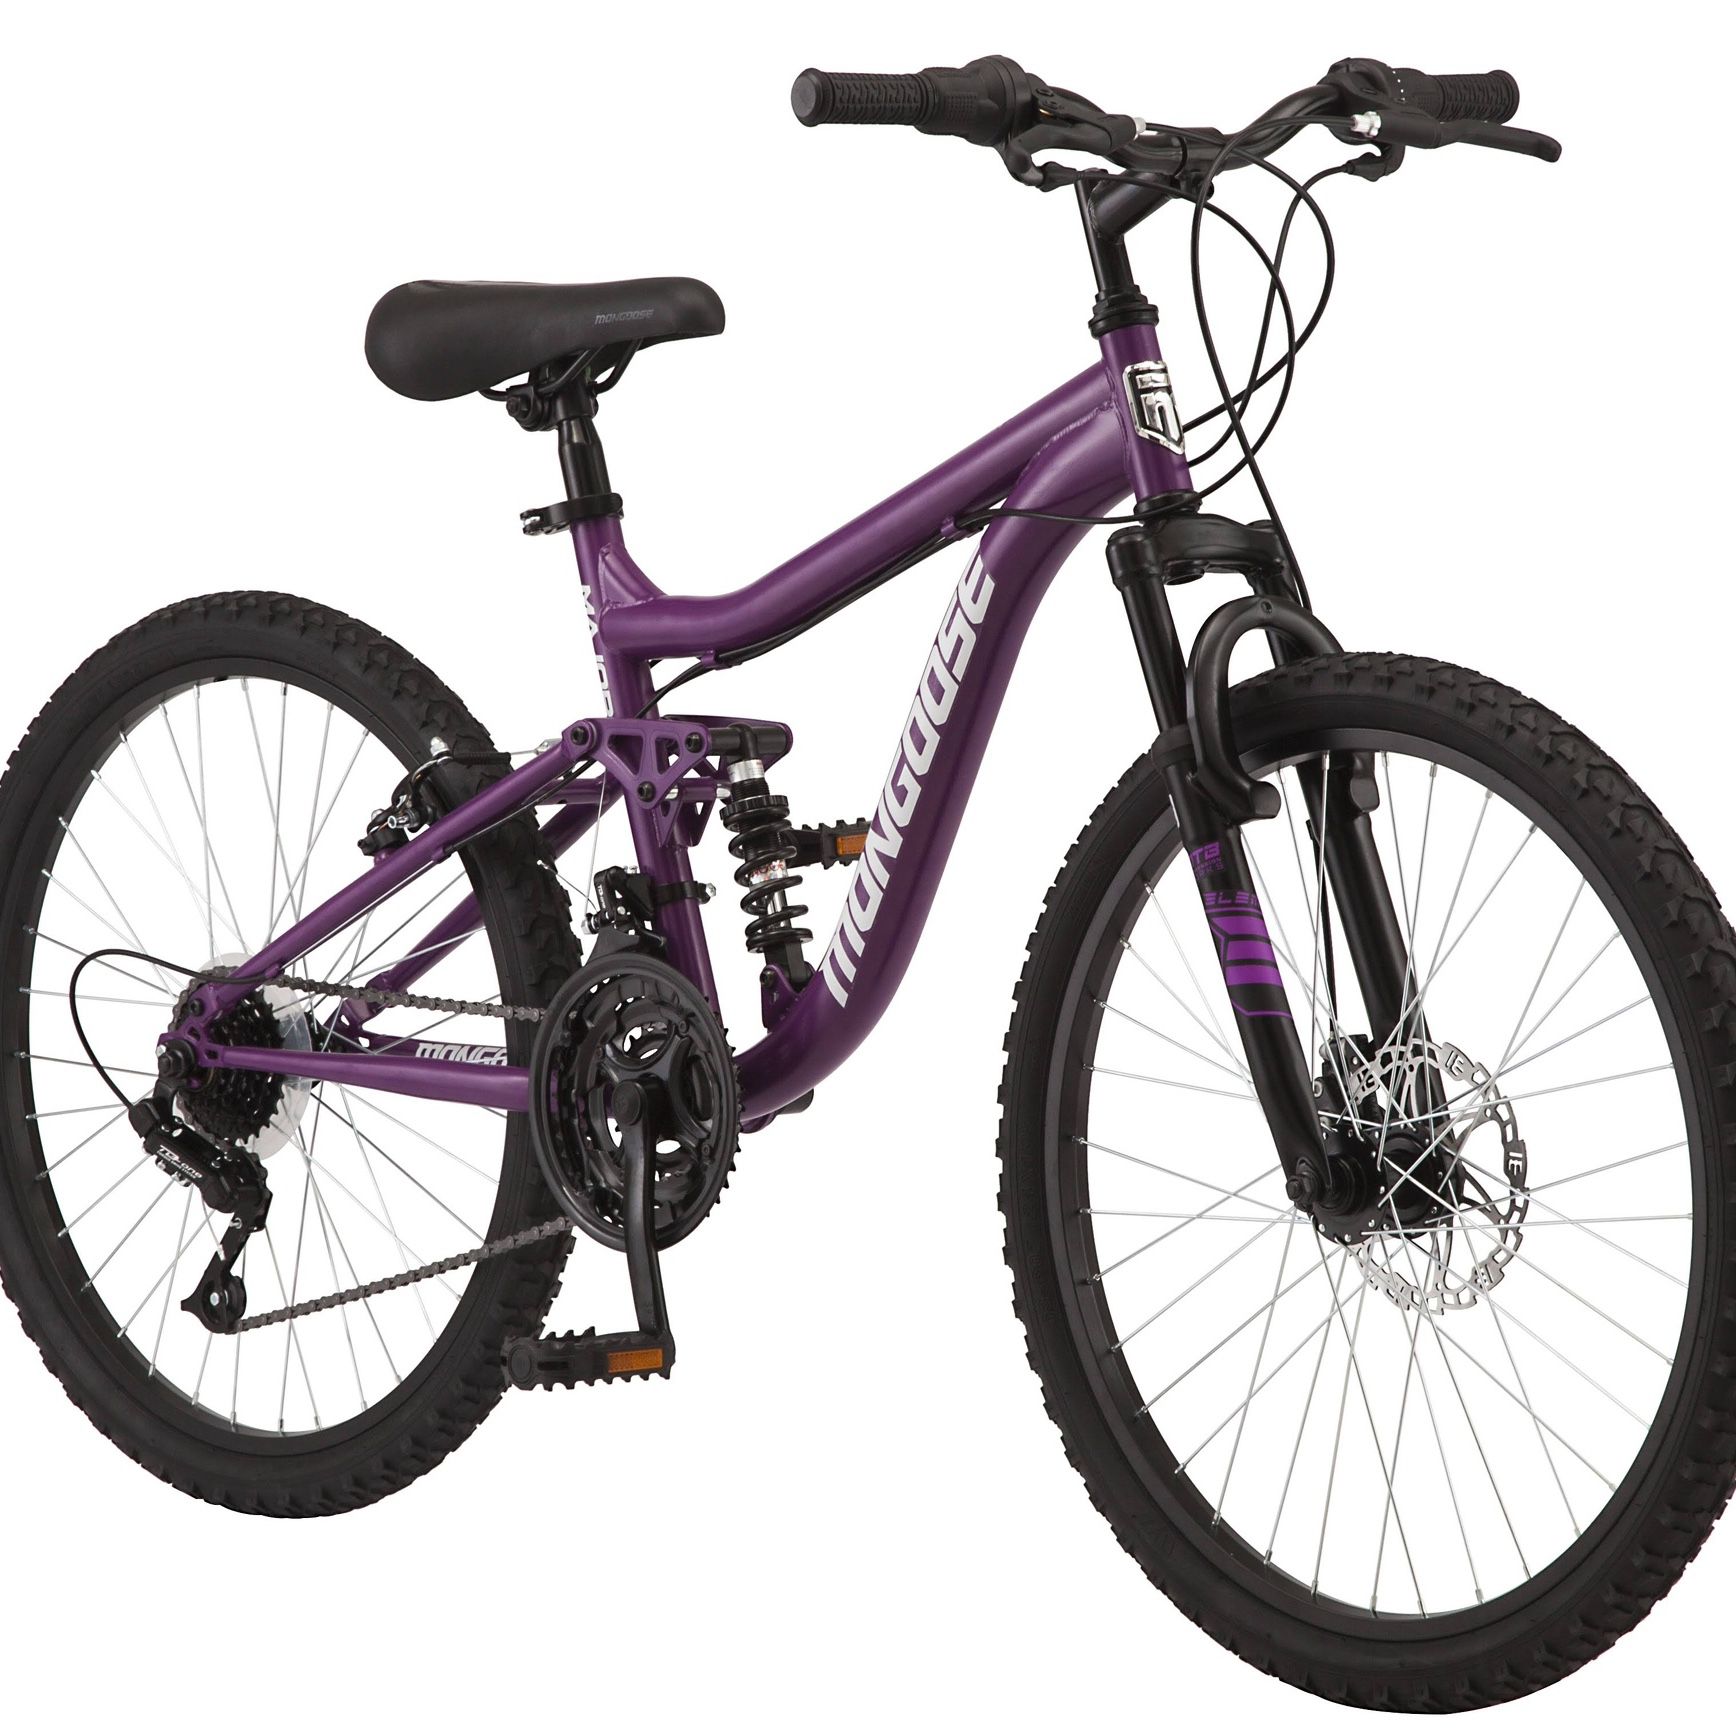 Mongoose mountain Bike 24-inch Purple